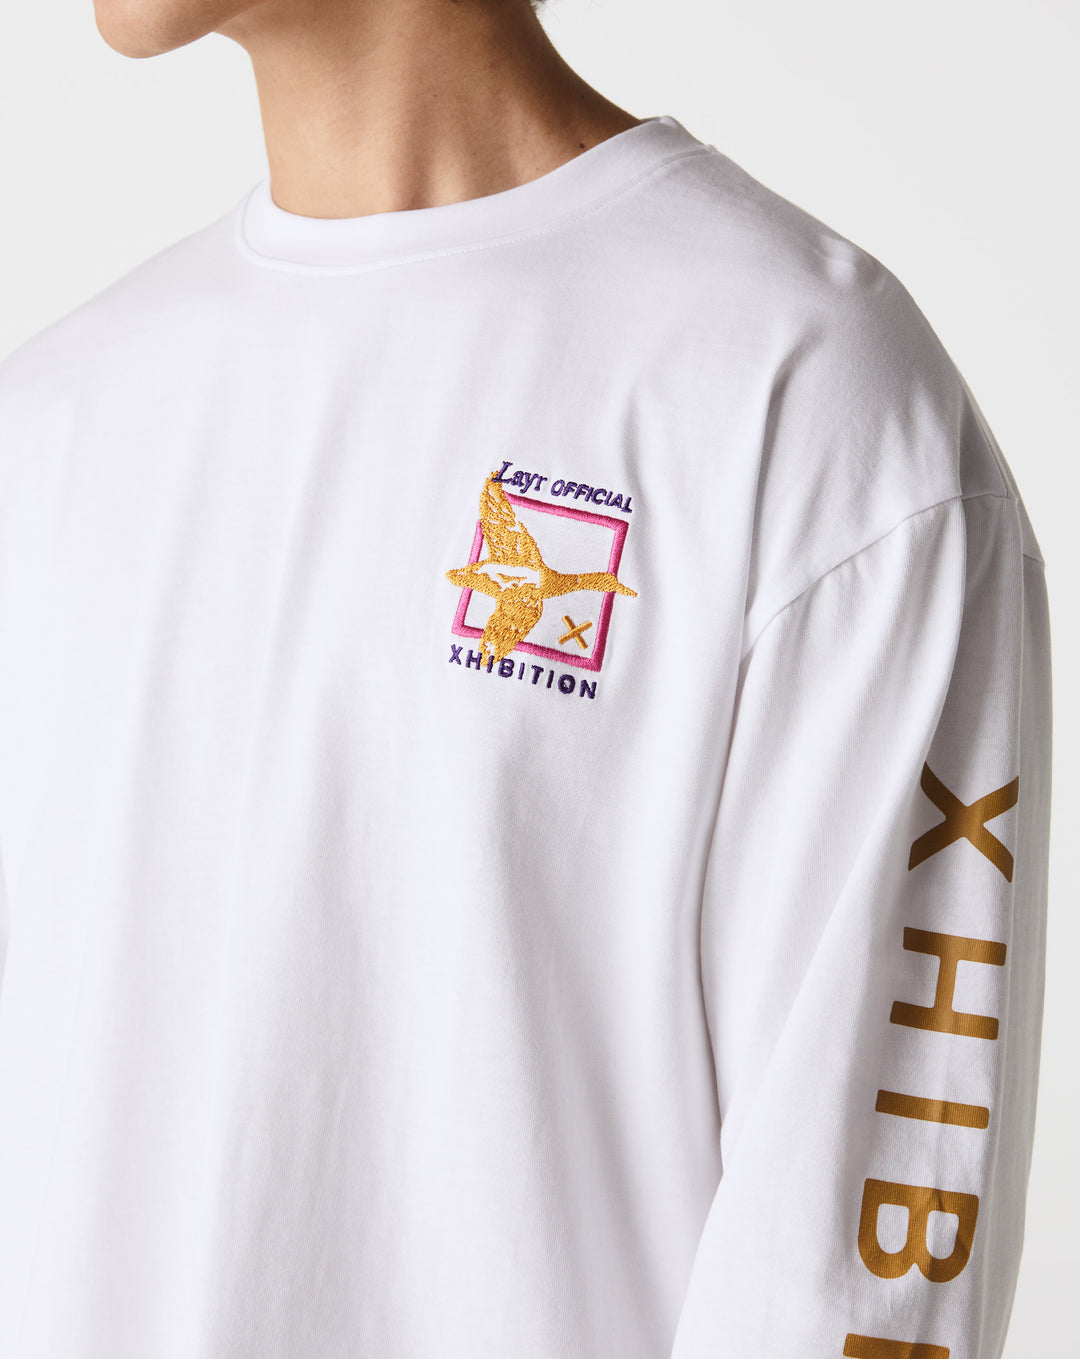 Layr Offical Xhibition x Layr Long Sleeve T-Shirt  - XHIBITION